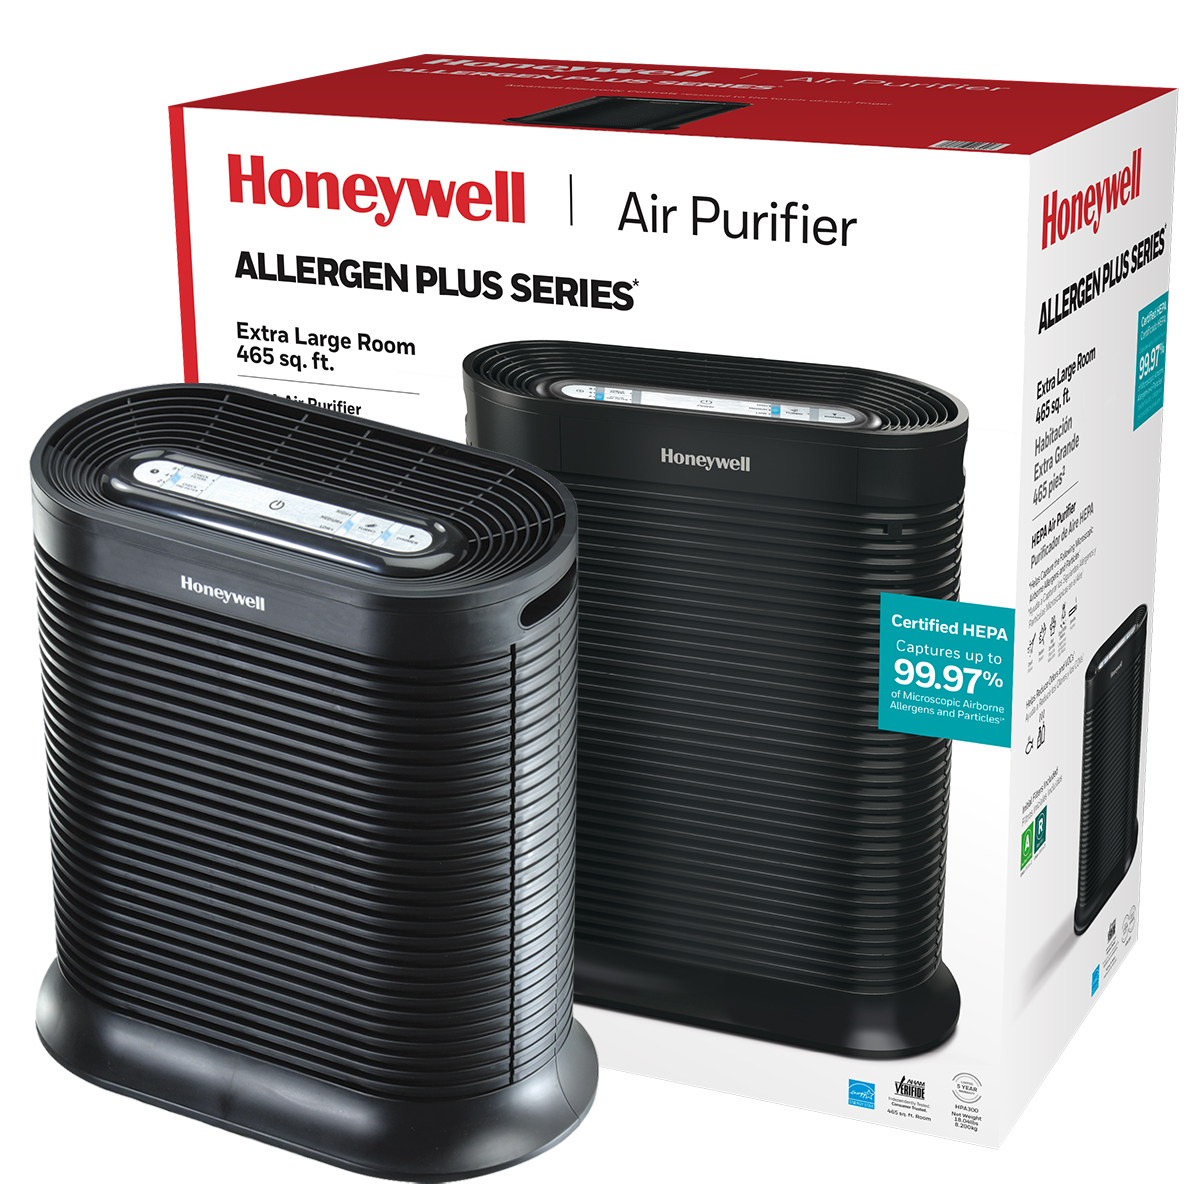 Honeywell Air Purifier, HPA300, 465 sq ft, HEPA Filter, Allergen, Smoke, Pollen, Dust Reducer - image 1 of 13